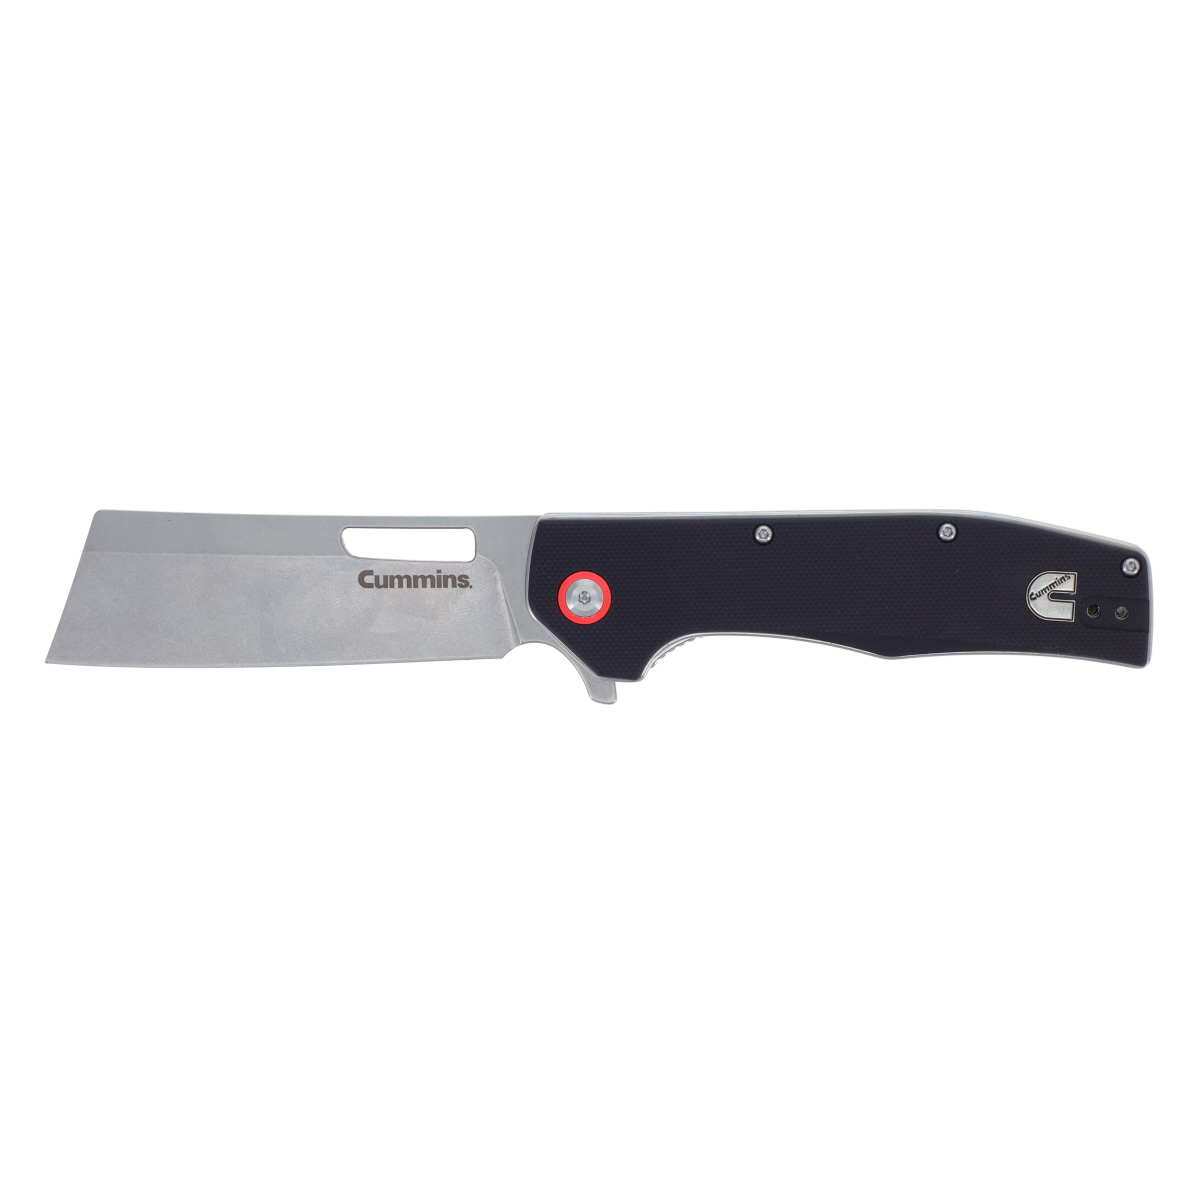 Cummins Cleaver Pocket Knife Folding 3.5-Inch Blade CMN4723 - Folding Knife with Frictionless Ball-Bearing Pivot for Easy Open C